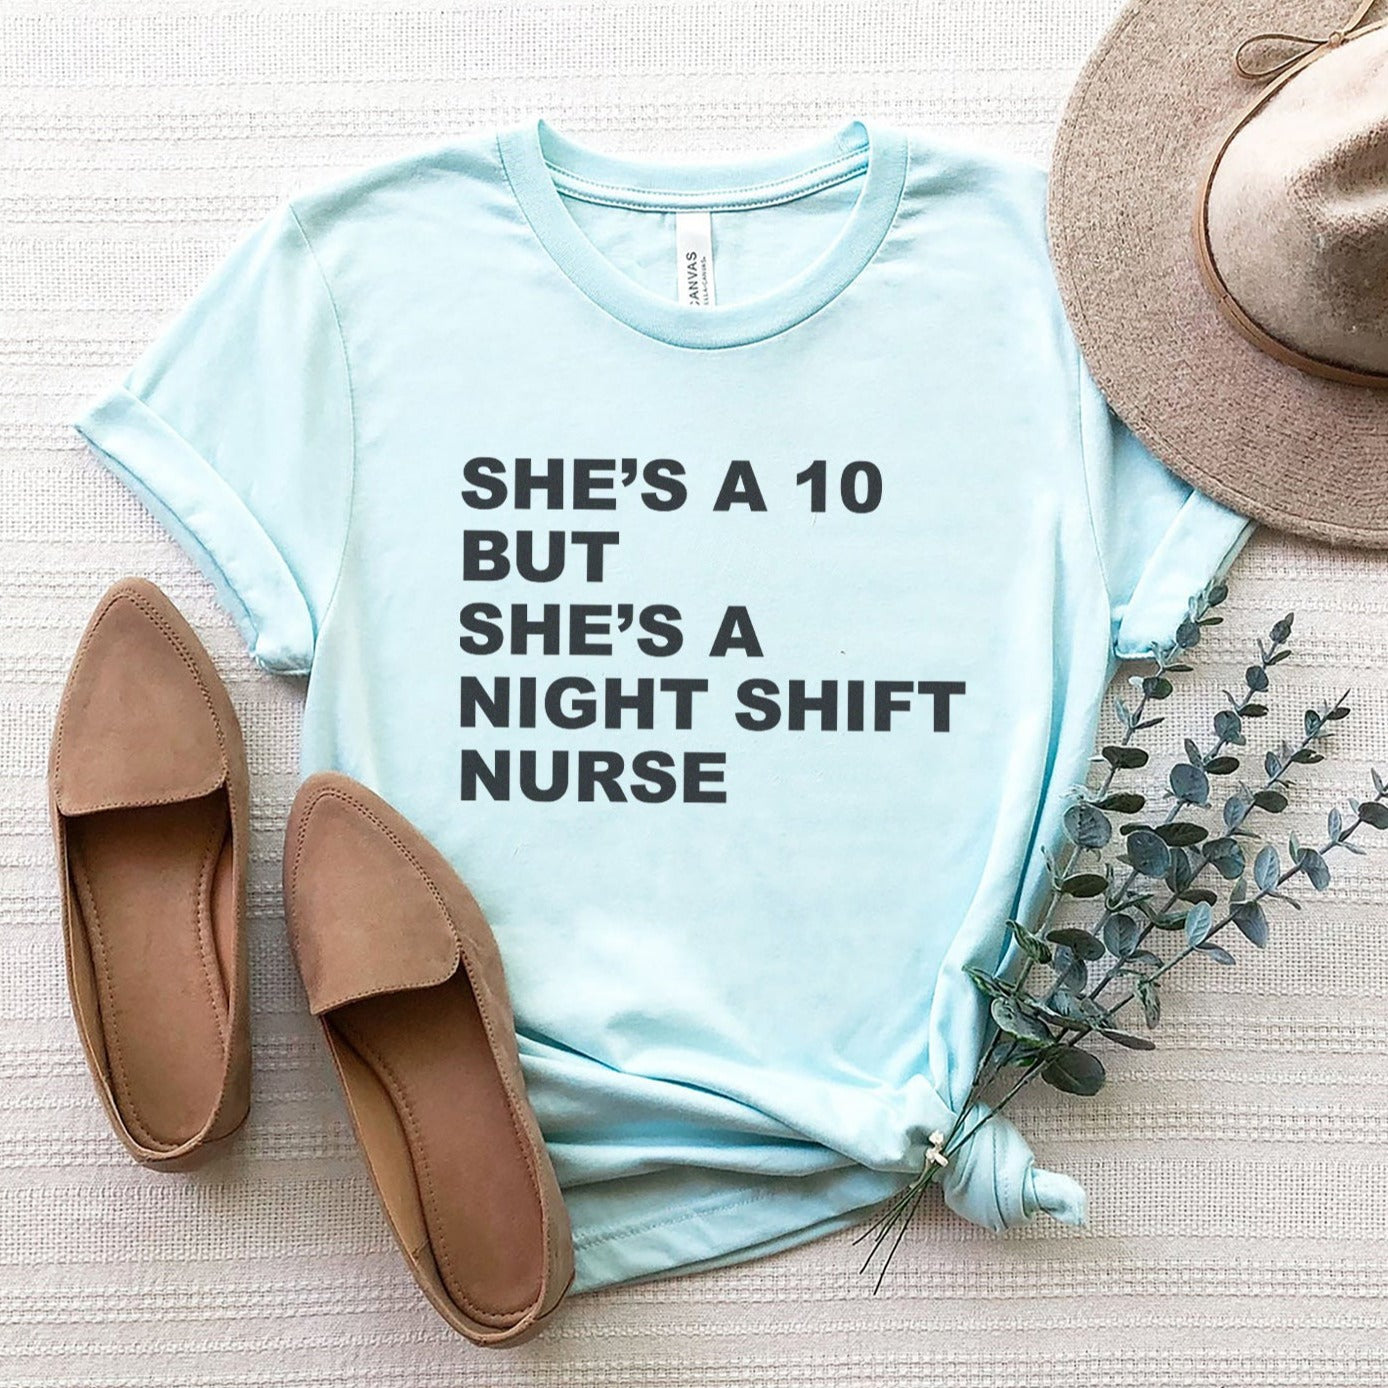 She's a 10 but a Night Shift Nurse T-Shirt